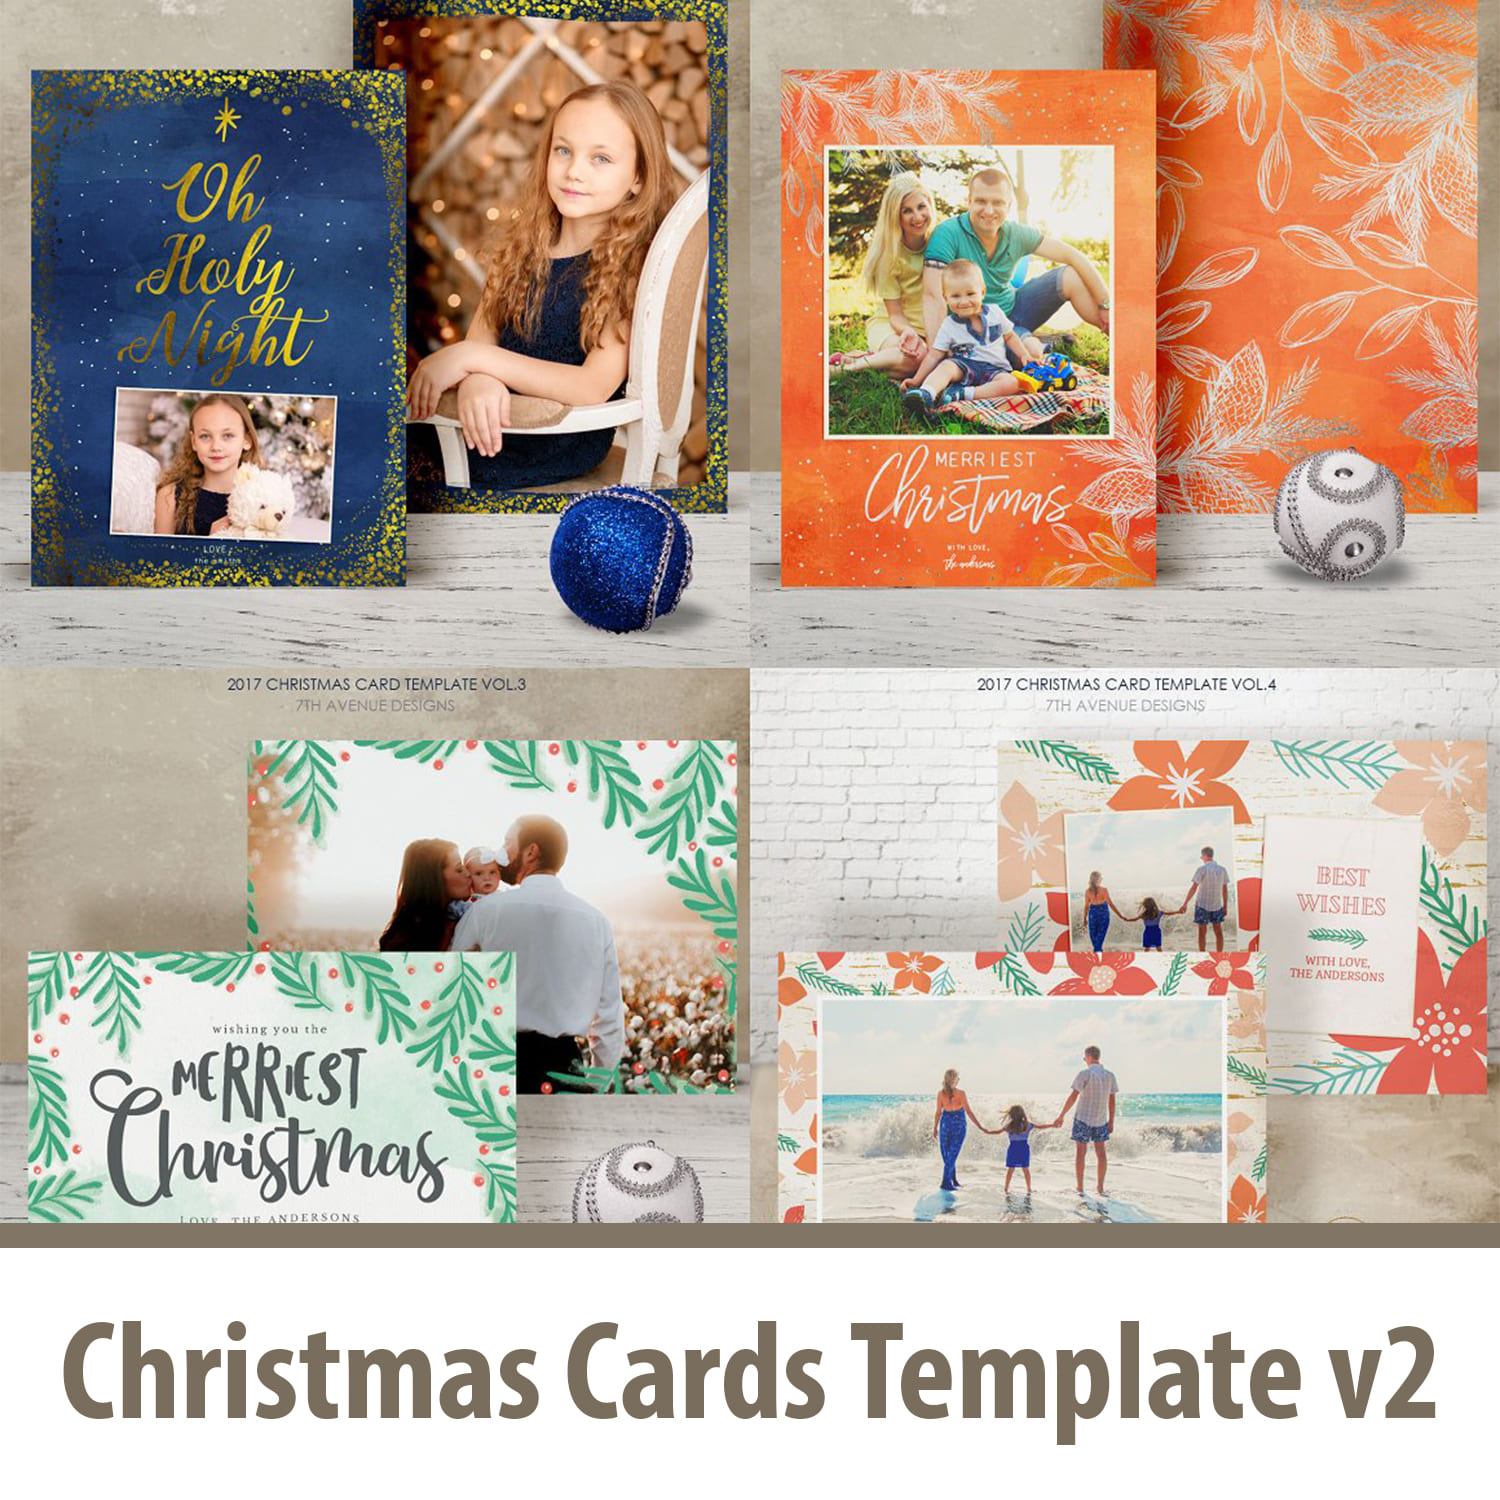 Christmas Cards Template v2 main cover.